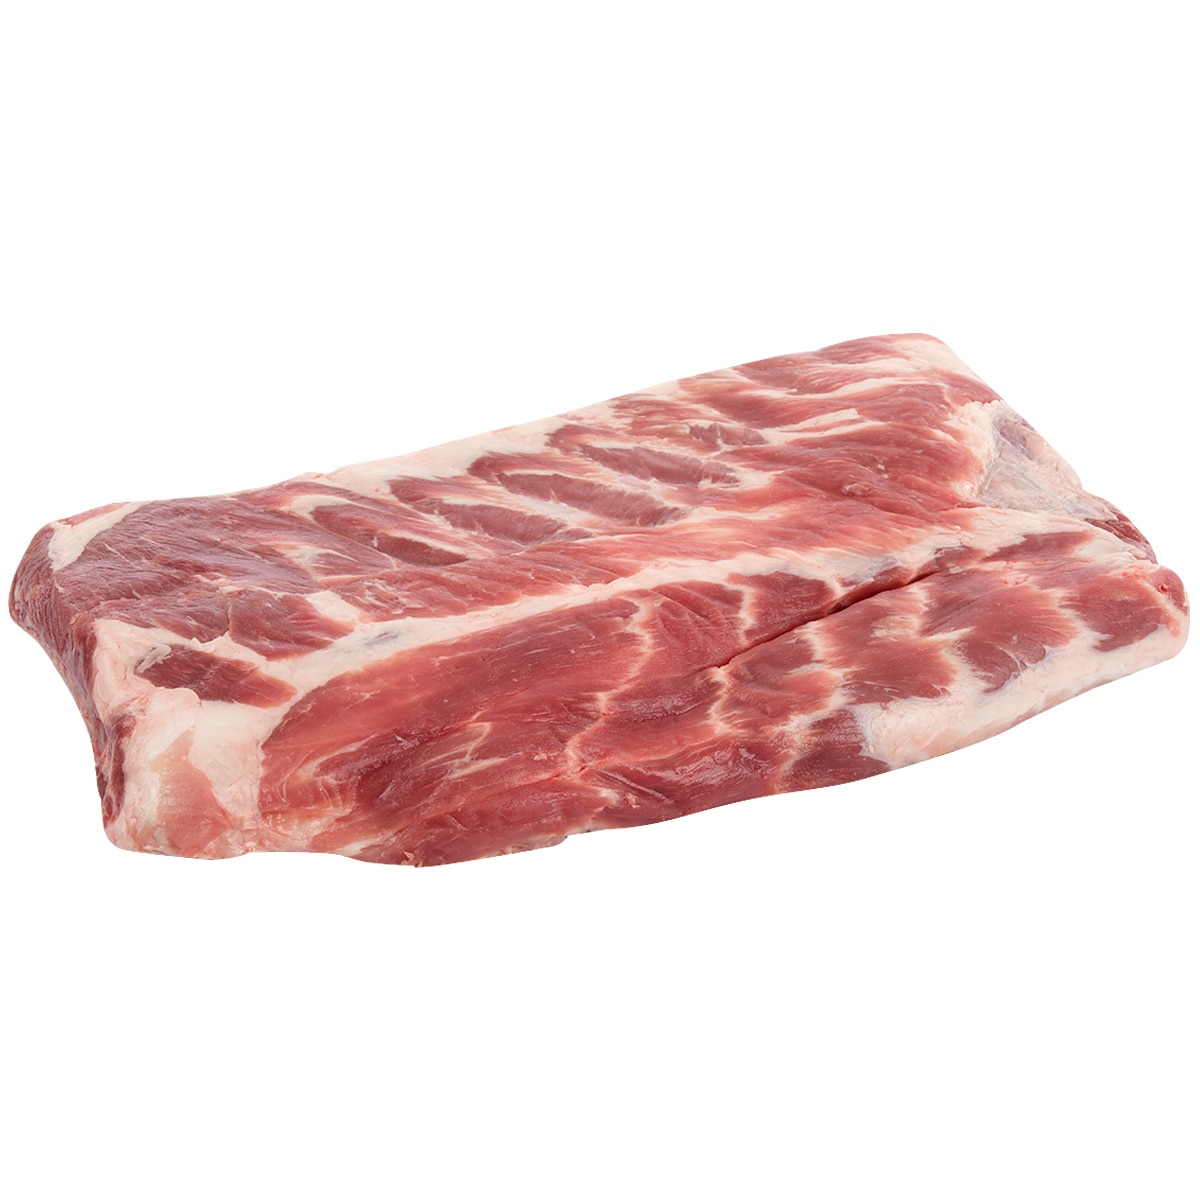 Pork Spare Ribs Case Sale